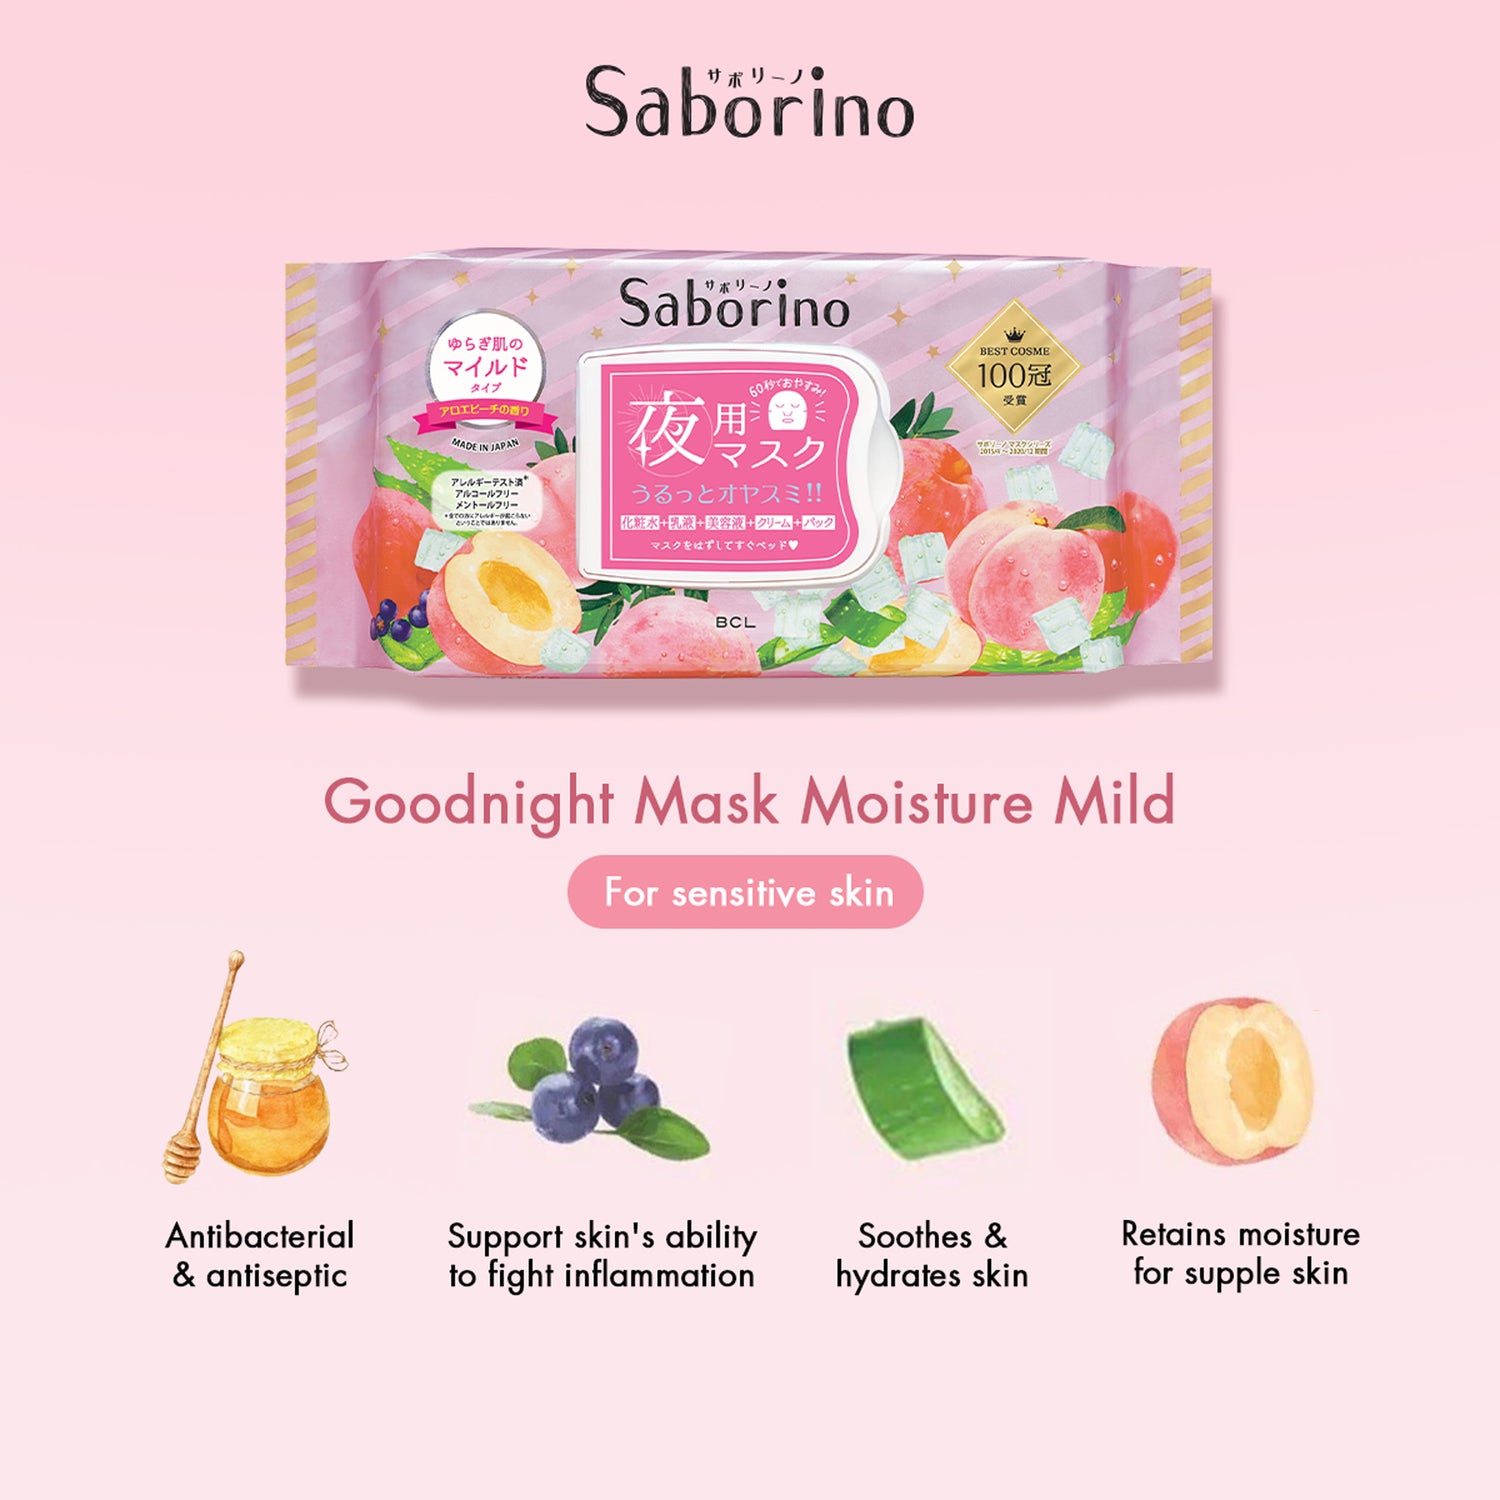 BCL Saborino Night Mask Peach Tea Limited Edition